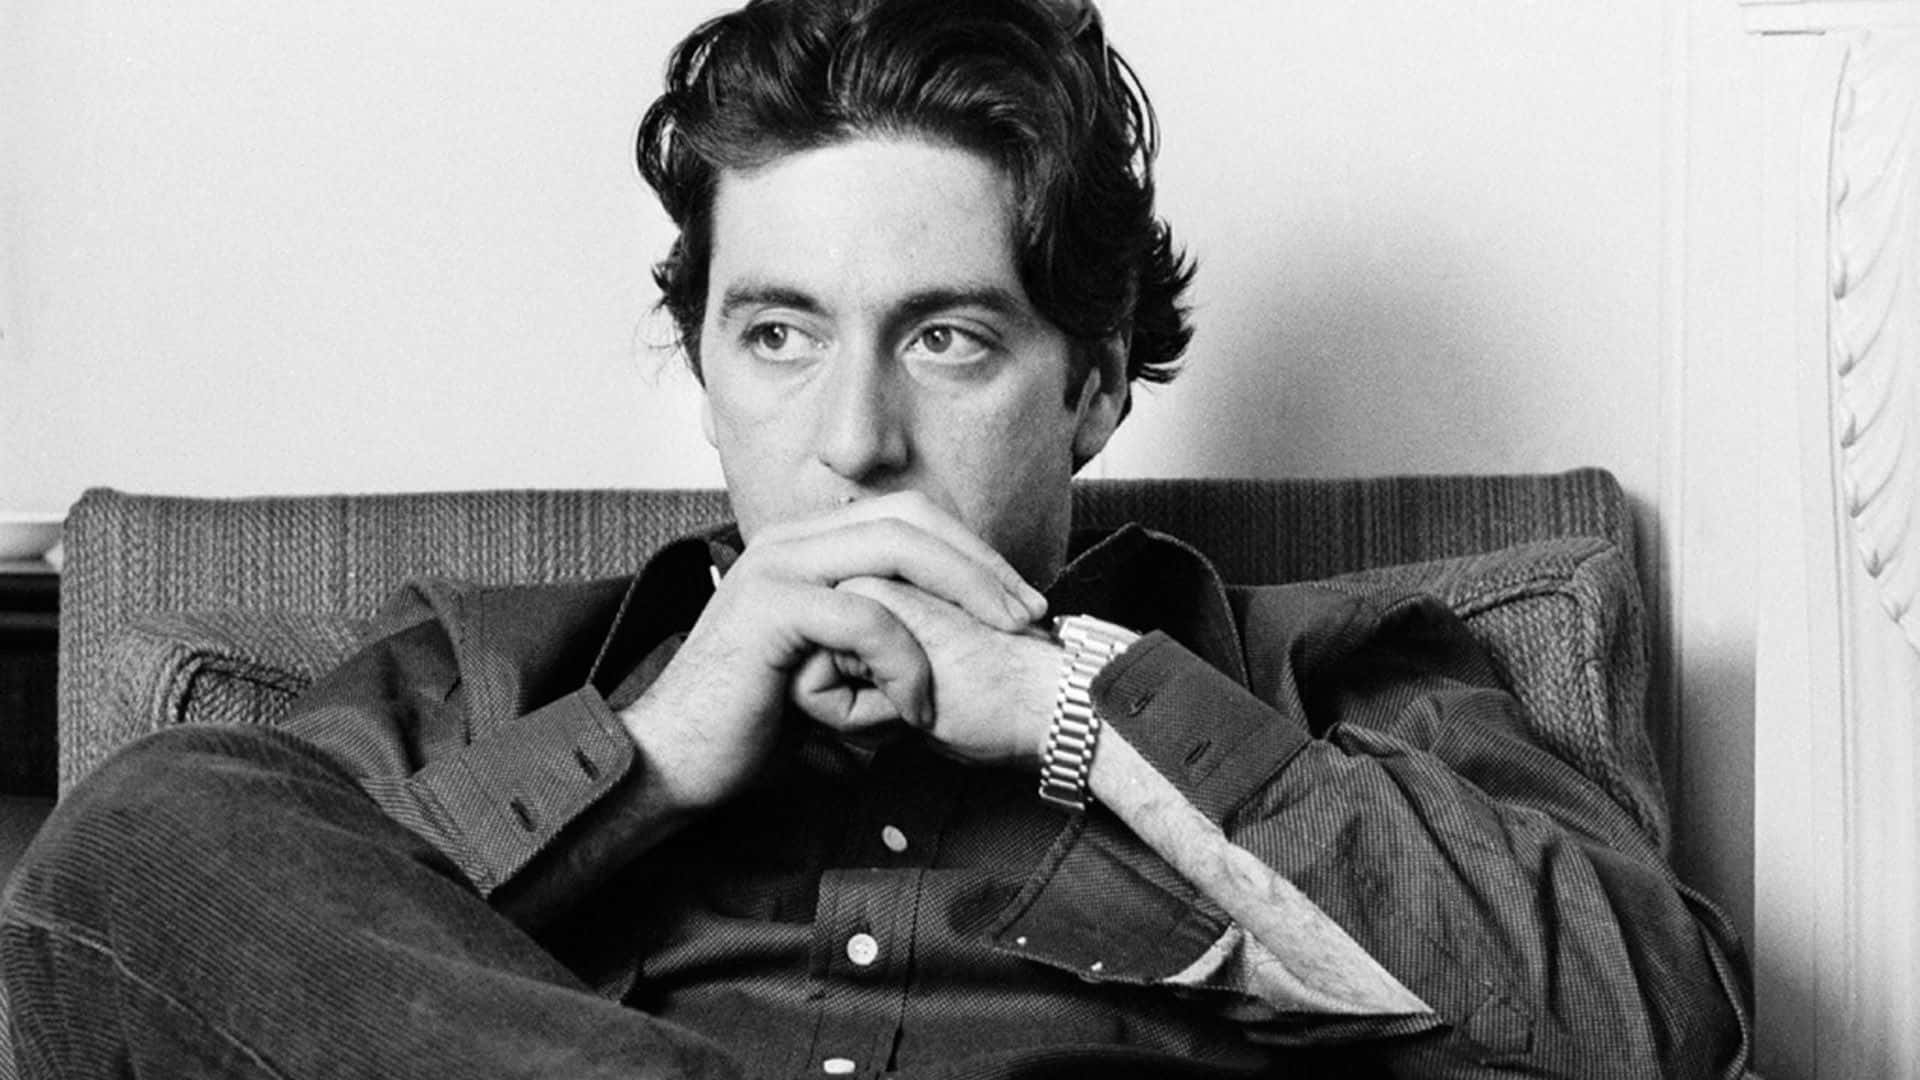 "Al Pacino - An Icon of American Cinema"